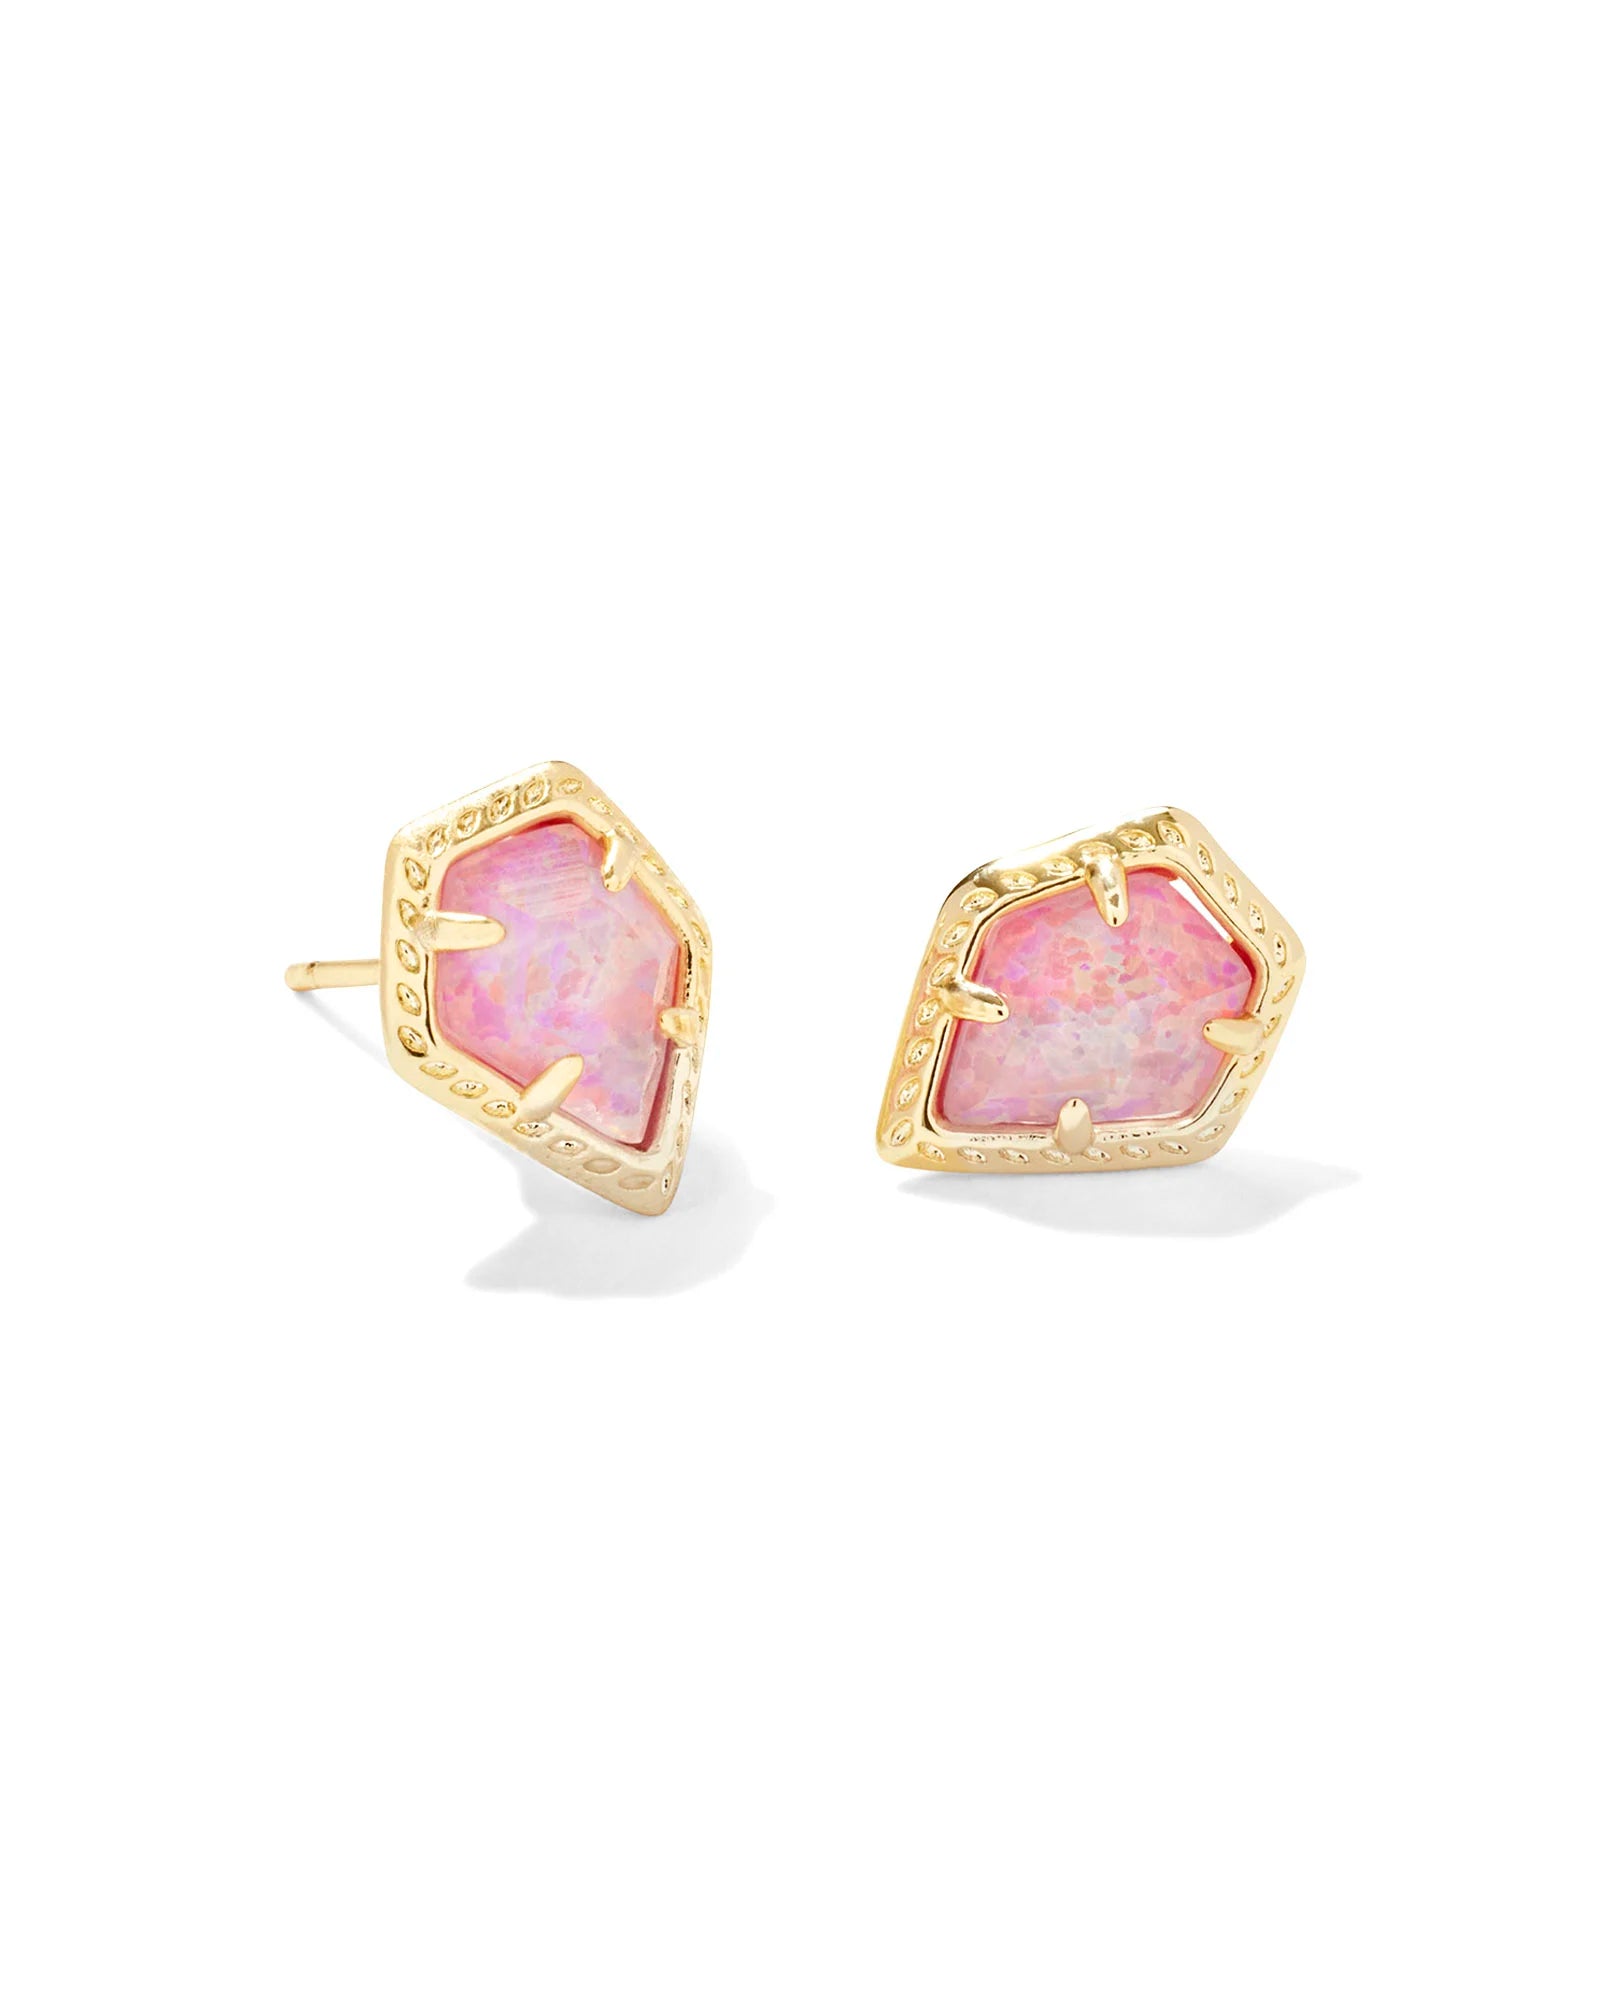 Framed Tessa Stud Earrings Gold Luster Pink Kyocera Opal